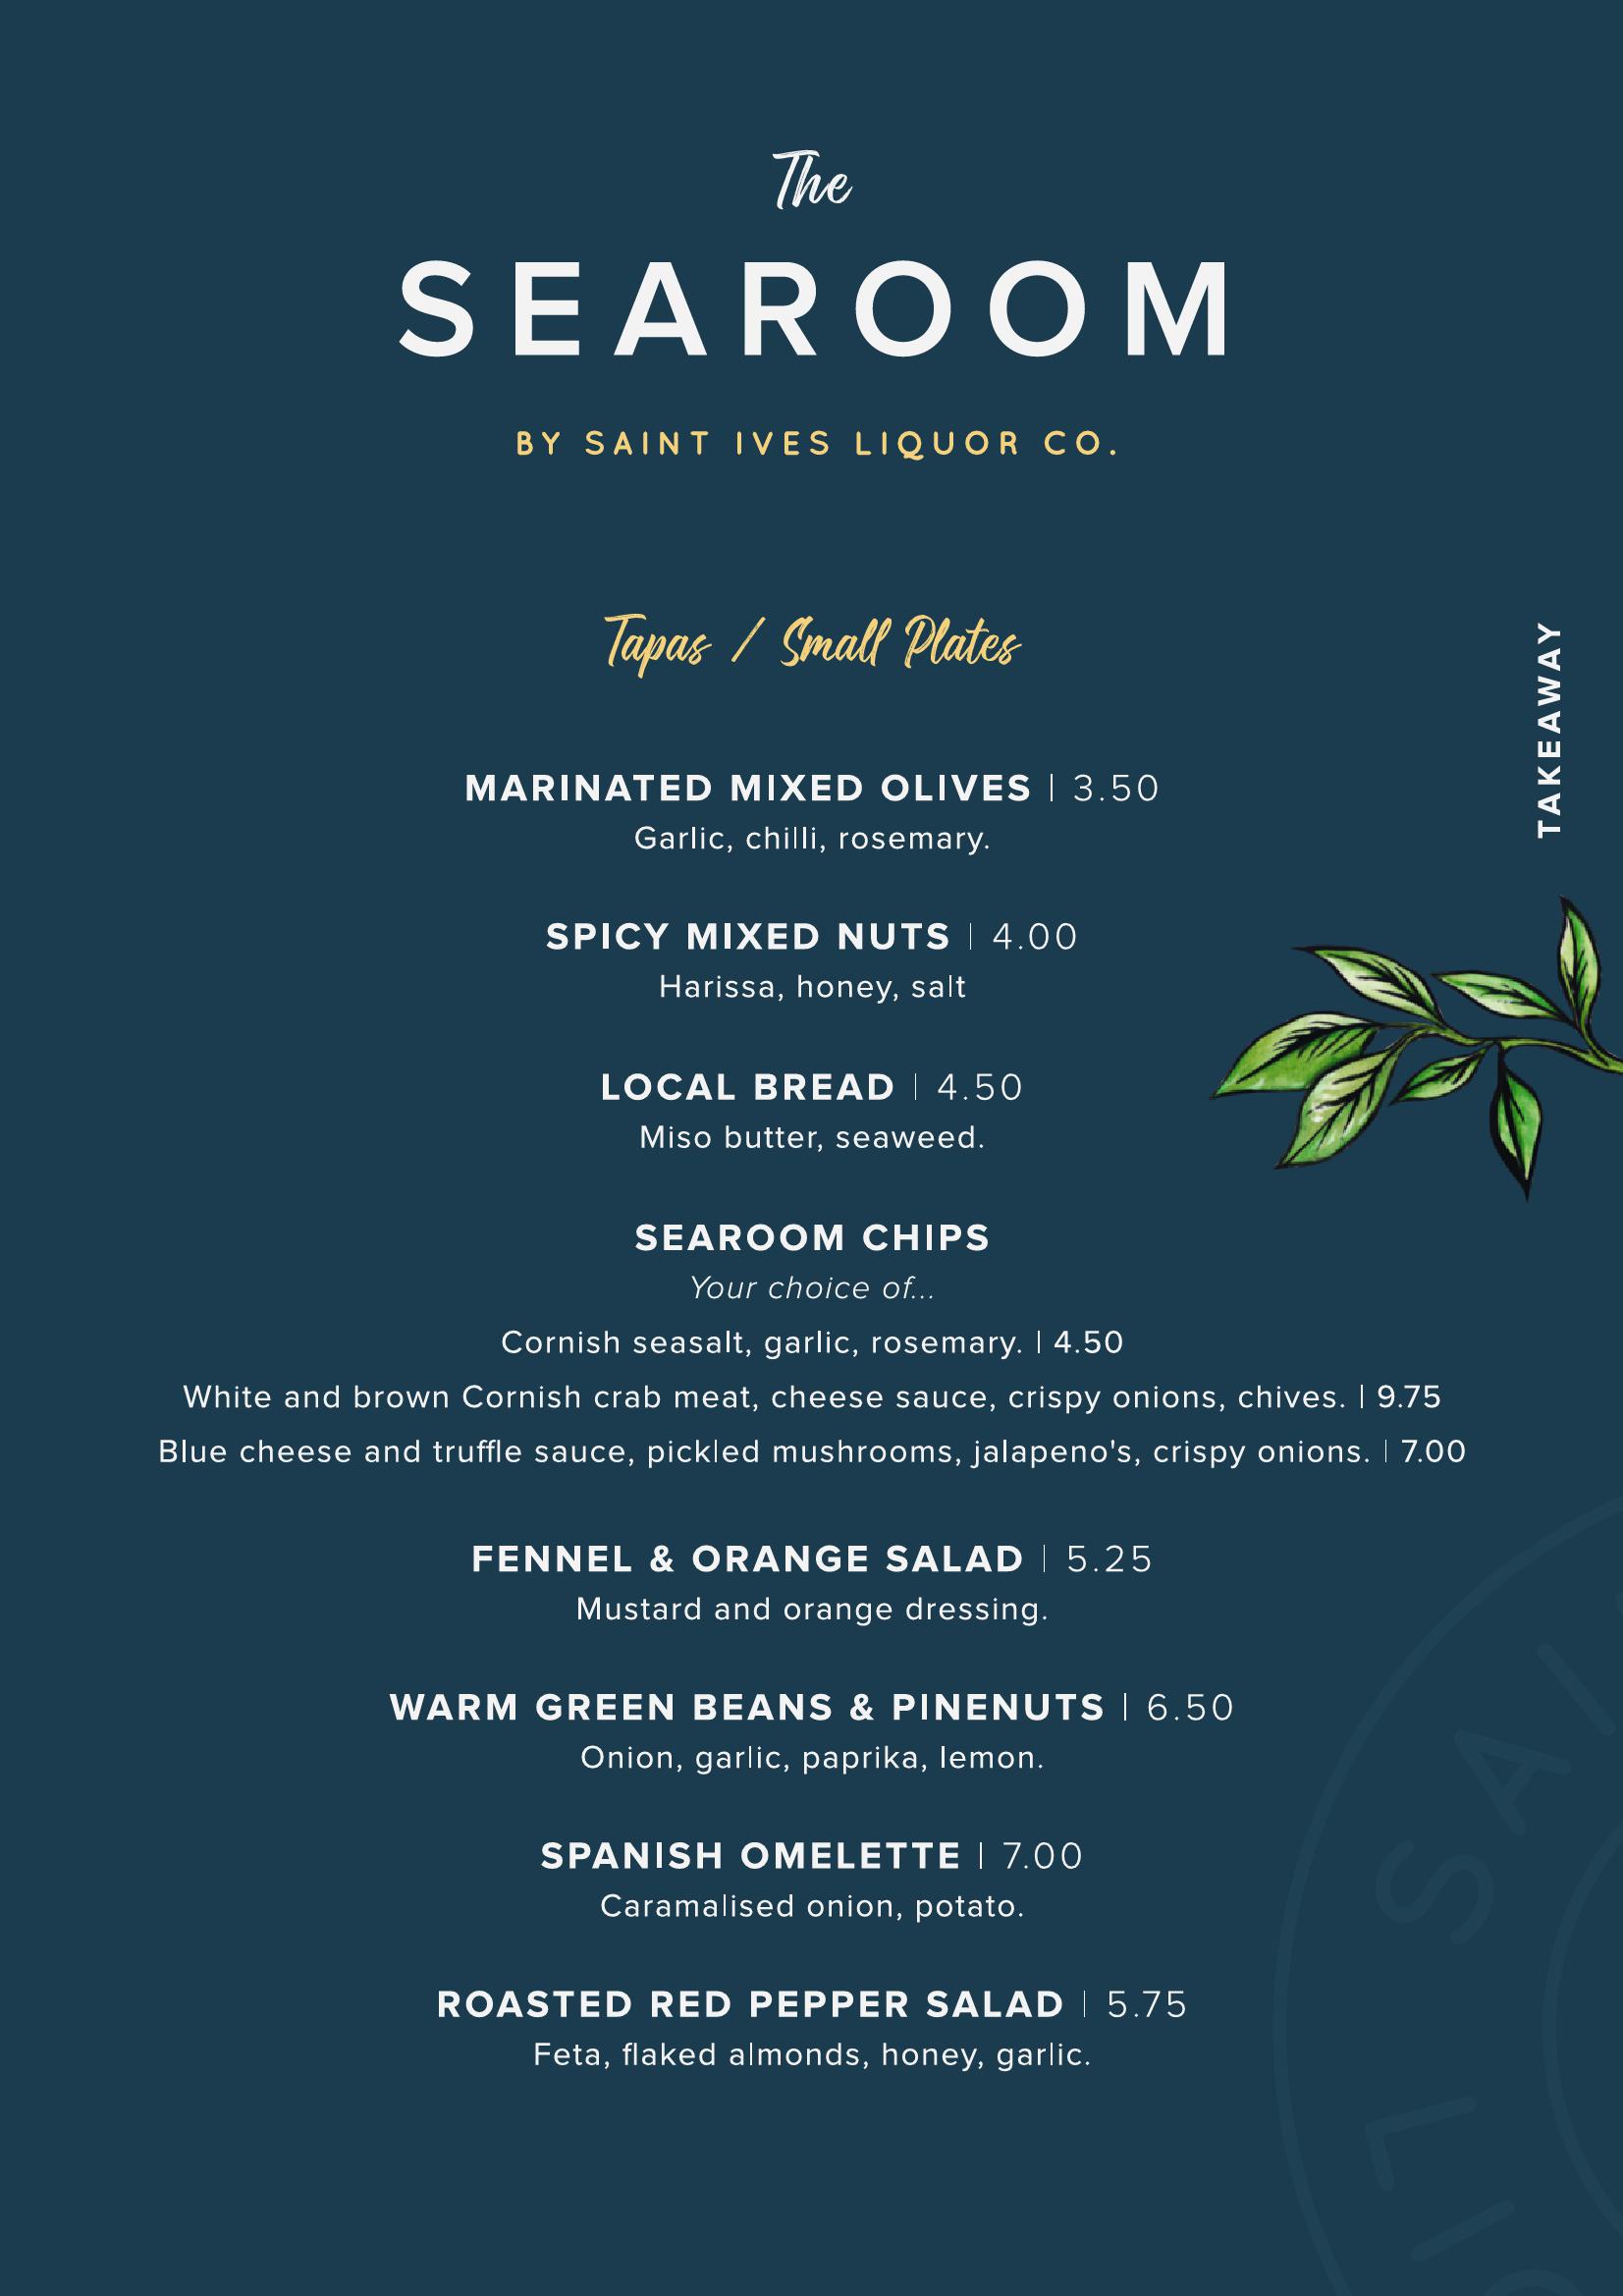 The Searoom by St Ives Liquor Co. - main menu